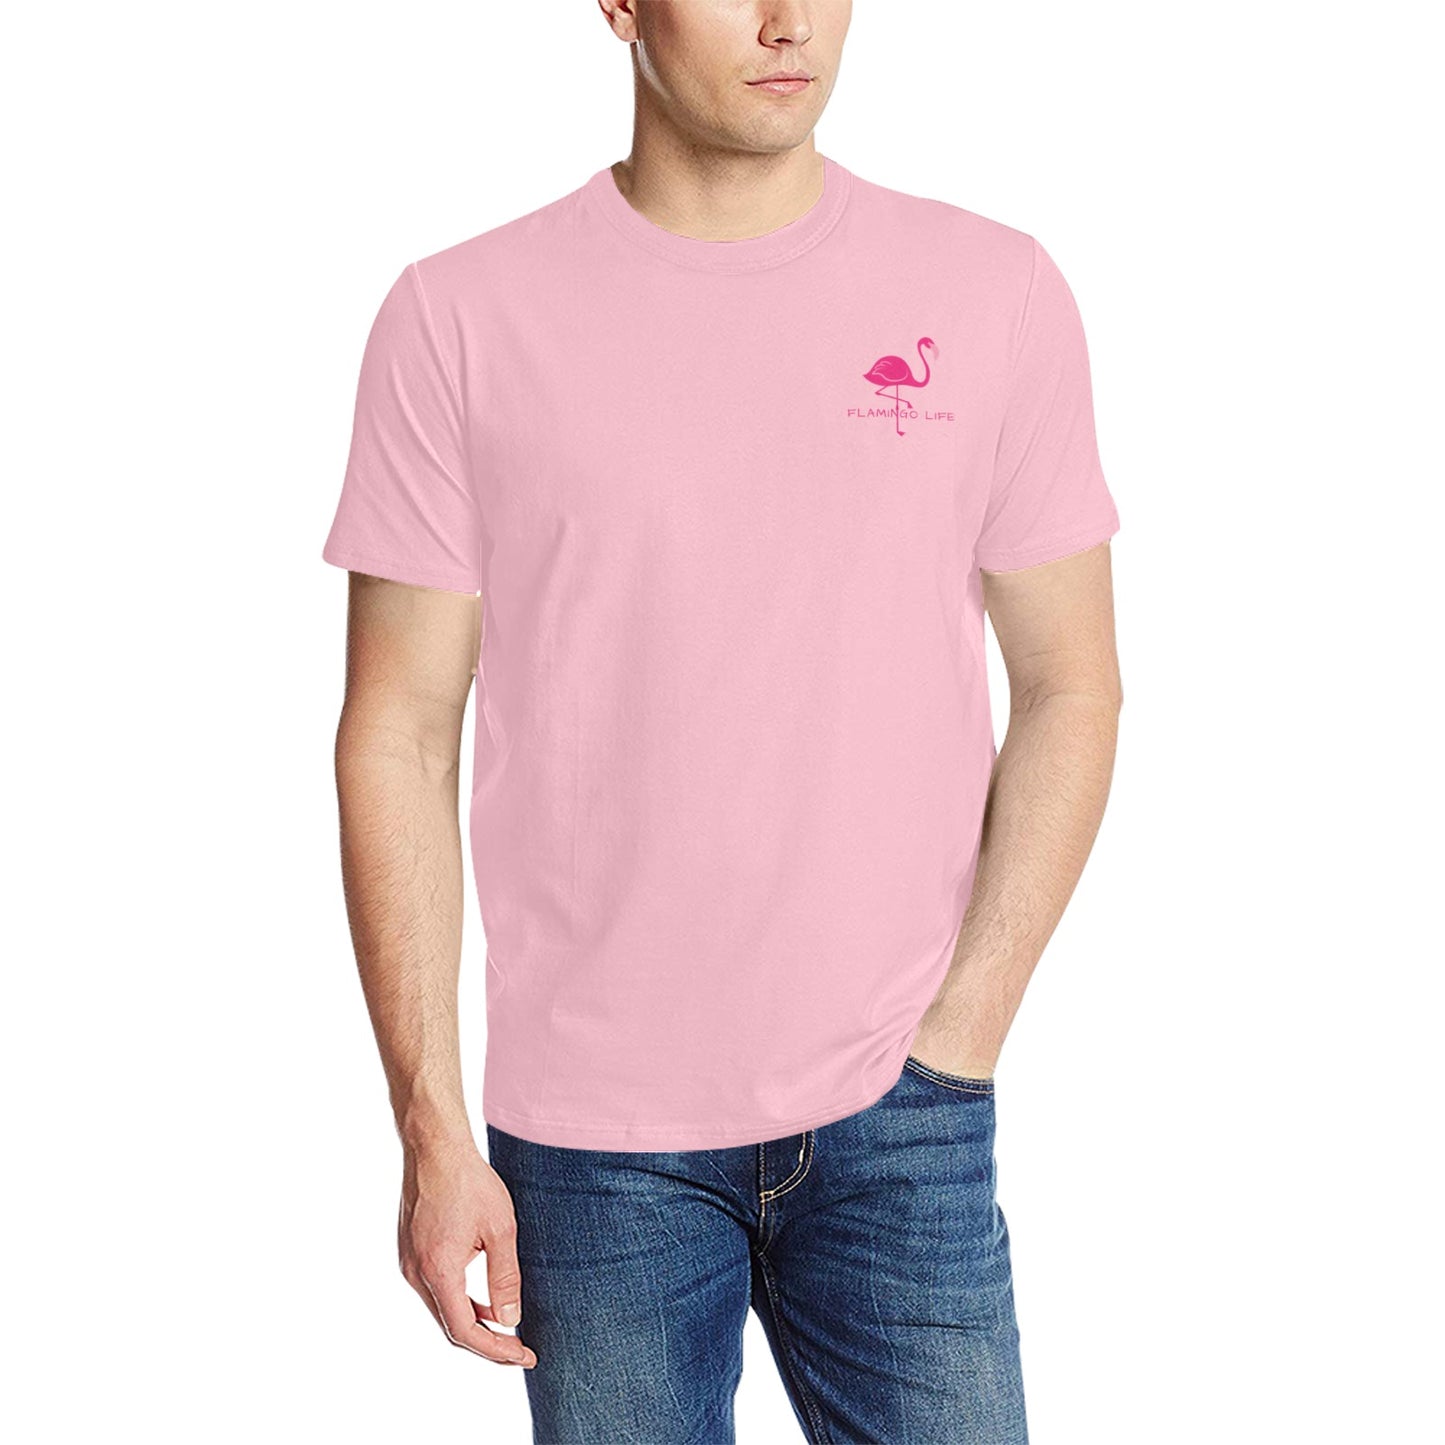 Flamingo Life® Real Men Wear Pink and Love Flamingos T-Shirt